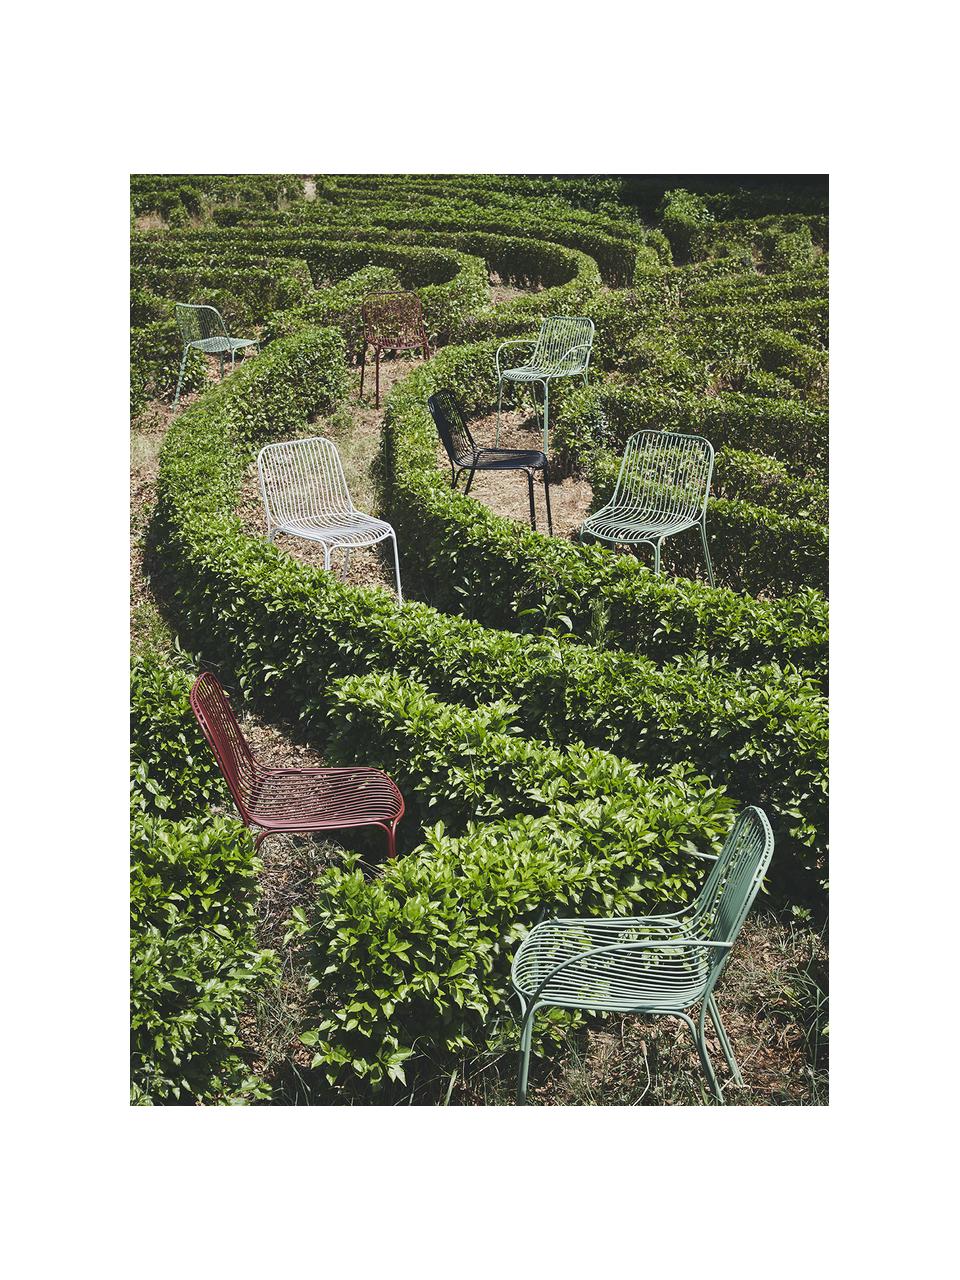 Sedia con braccioli da giardino Hiray, Acciaio zincato, verniciato, Verde salvia, Larg. 46 x Prof. 55 cm